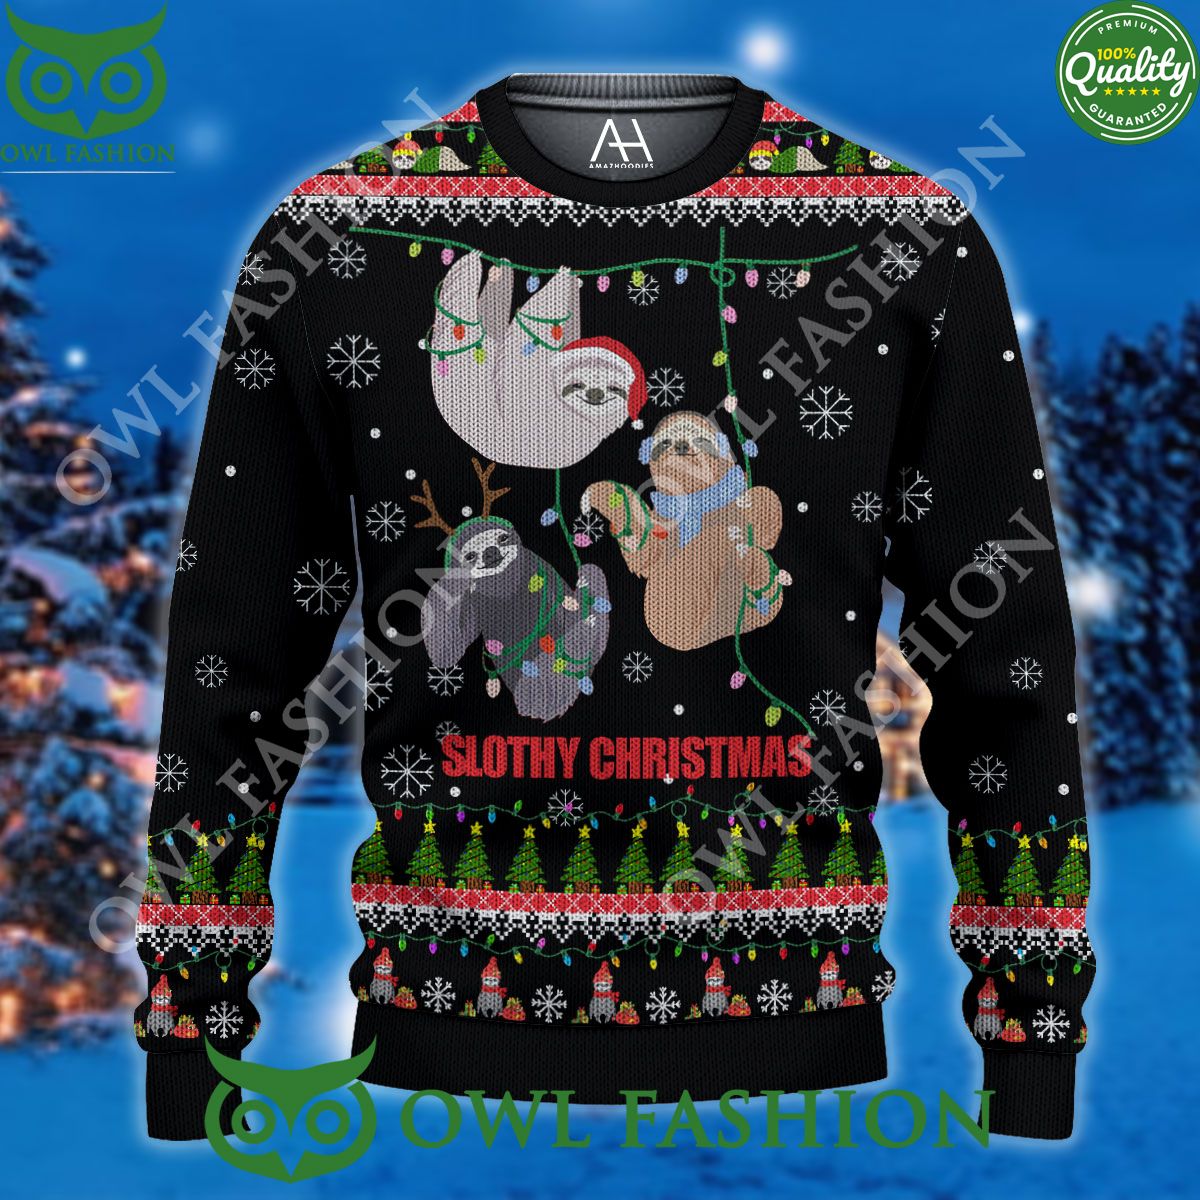 slothy christmas 3d aop ugly sweater christmas 1 jC2an.jpg